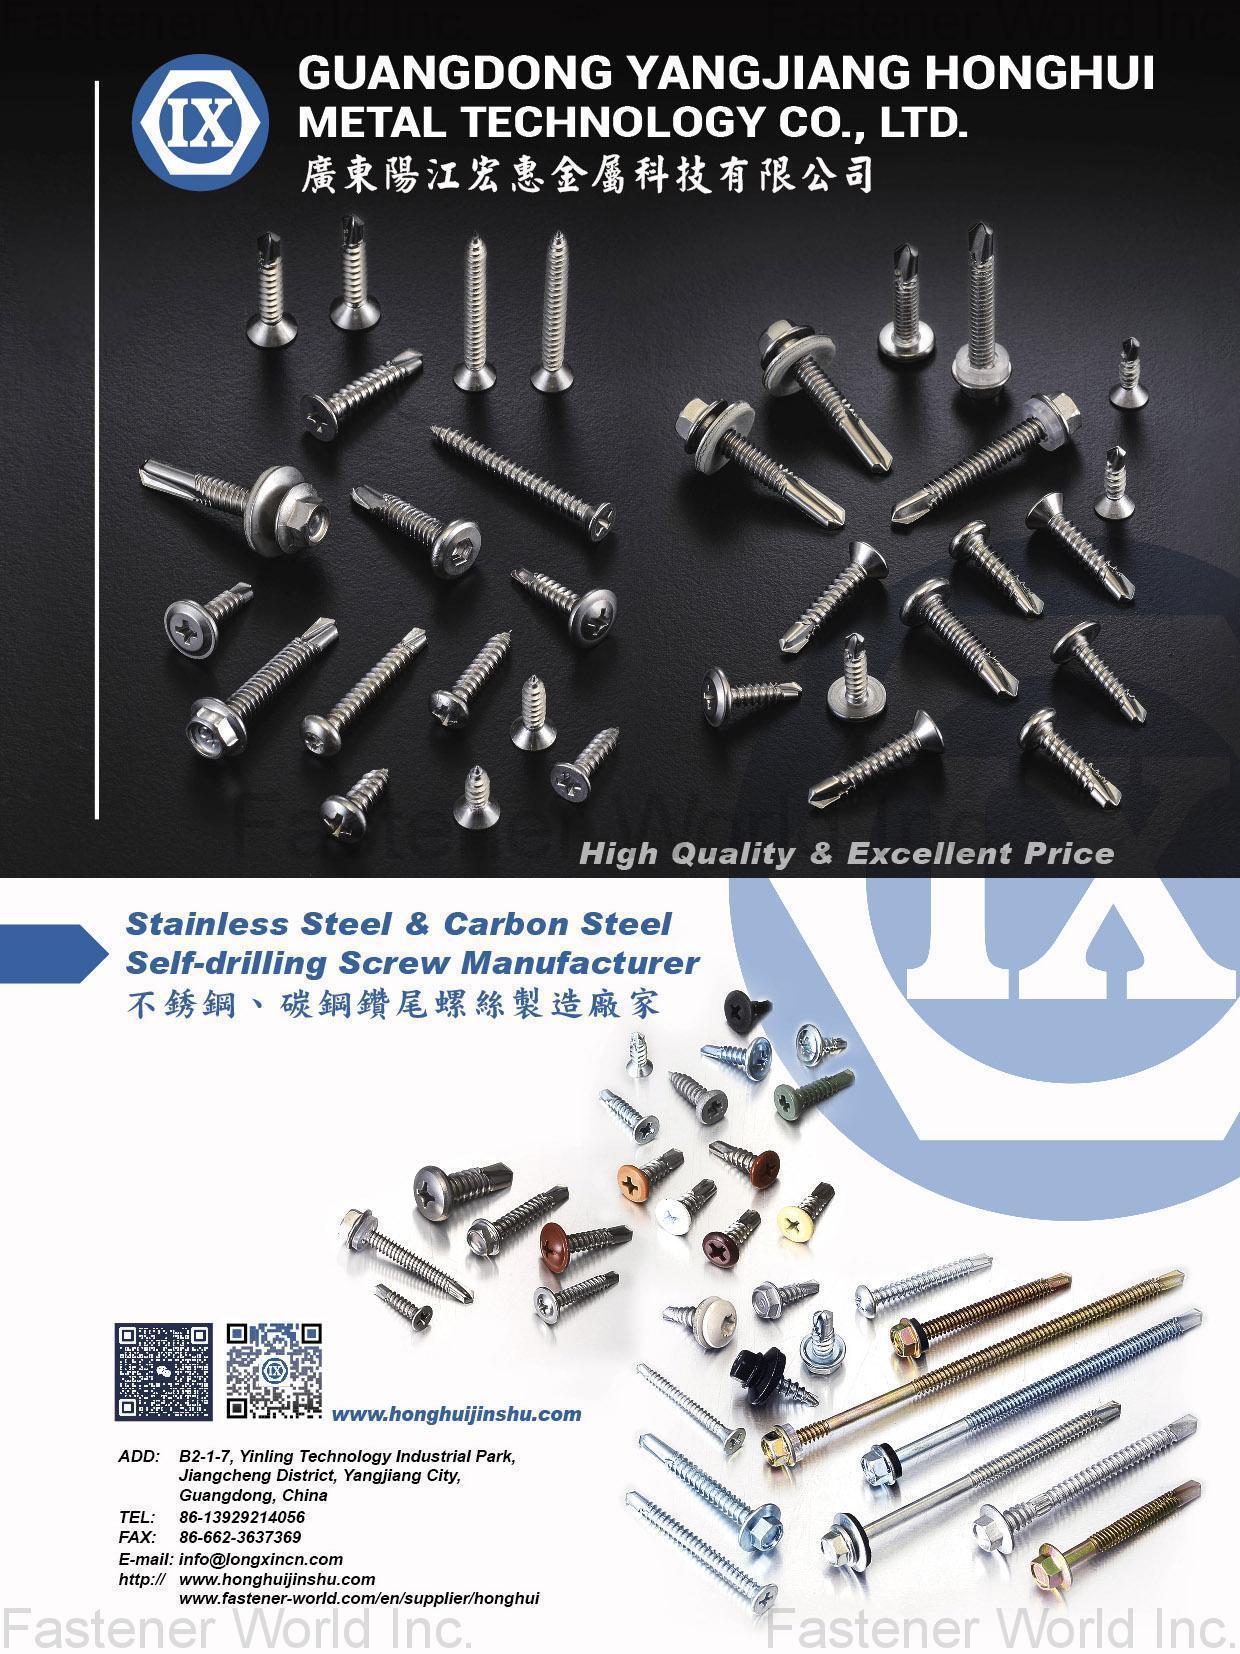 GUANGDONG YANGJIANG HONGHUI METAL TECHNOLOGY CO., LTD. , Stainless Steel & Carbon Steel Self-drilling Screw Manufacturer